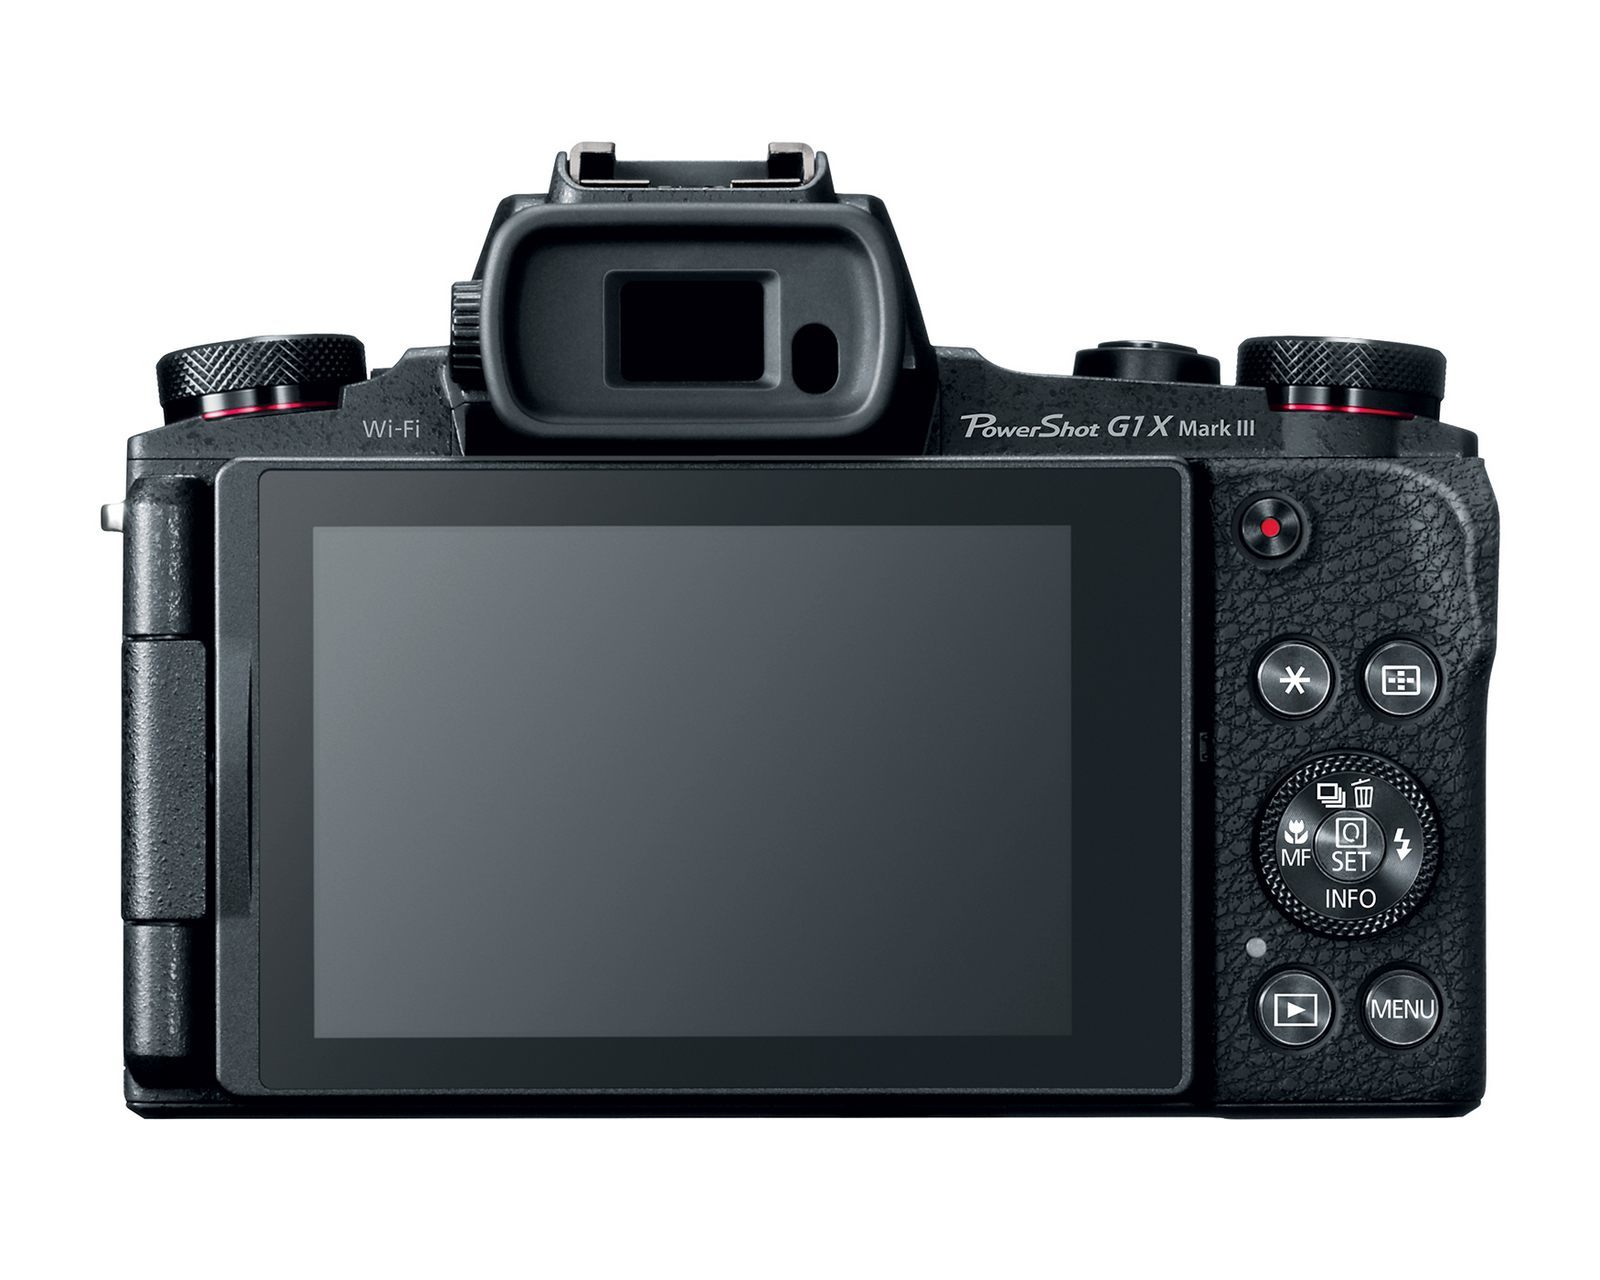 Canon PowerShot G1 X Mark III duyuruldu